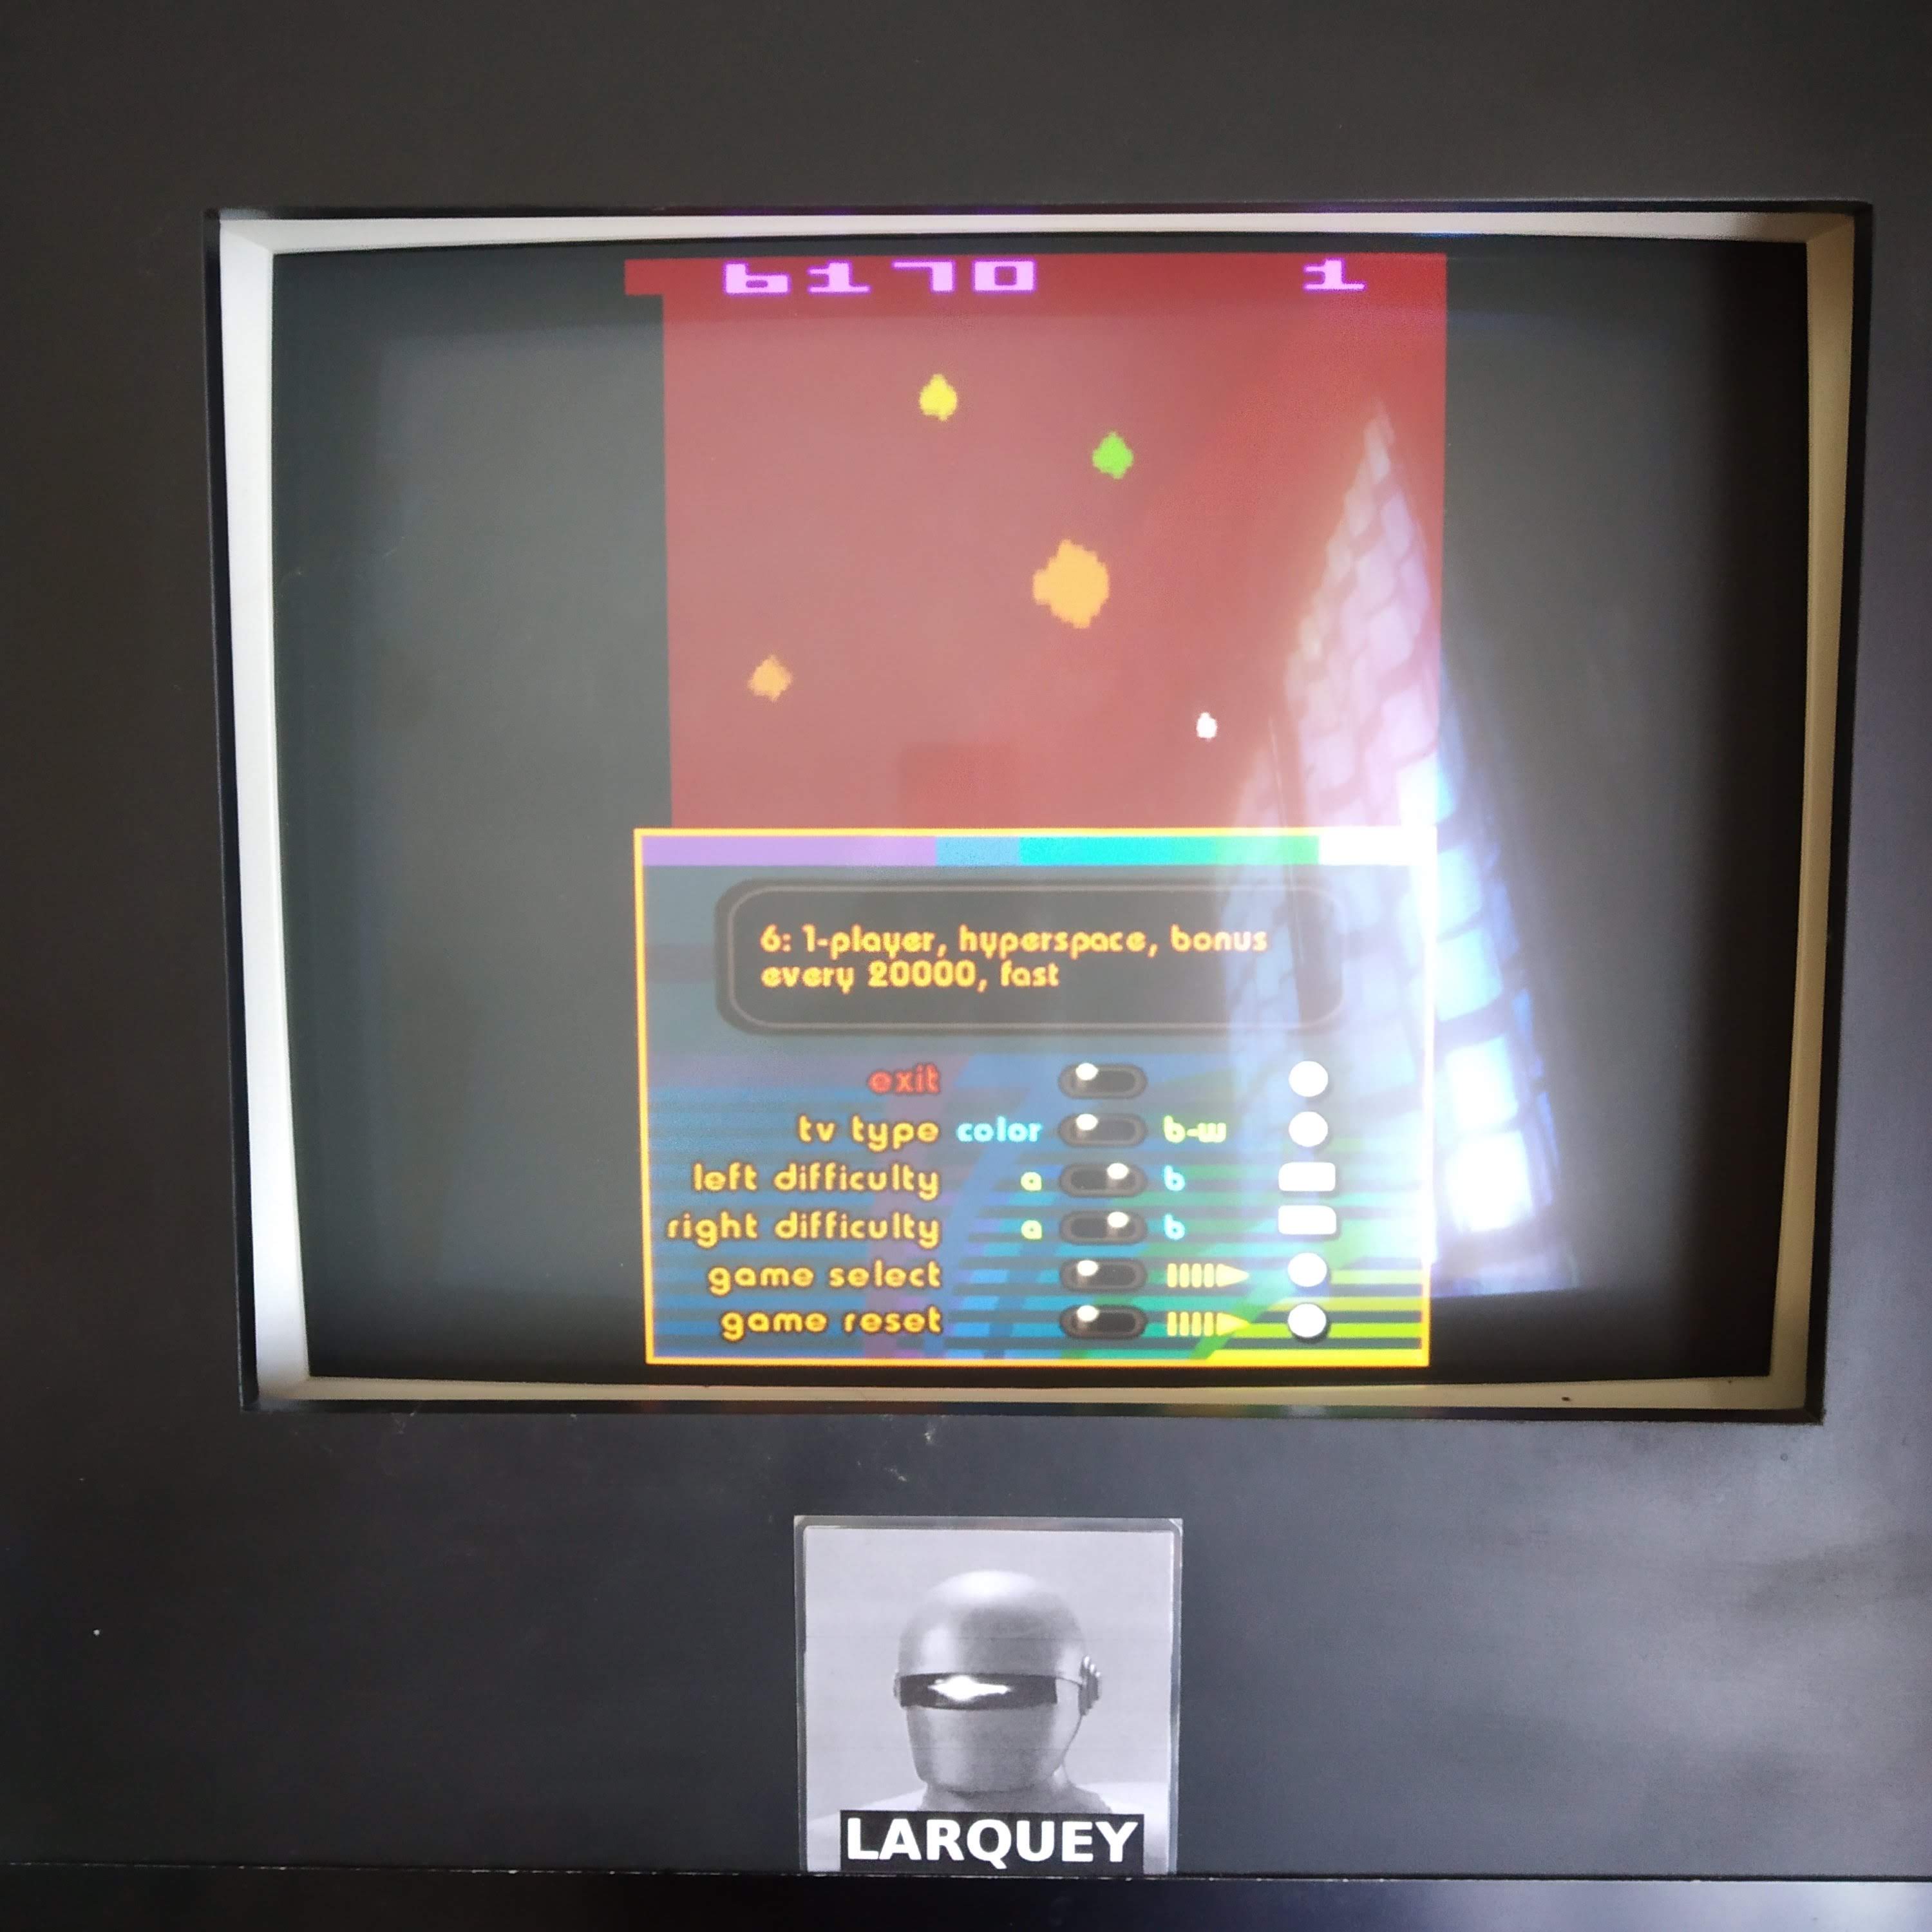 Larquey: Atari Greatest Hits: Volume 1: Asteroids: Game 6 [Atari 2600] (Nintendo DS Emulated) 6,170 points on 2020-05-03 05:50:30